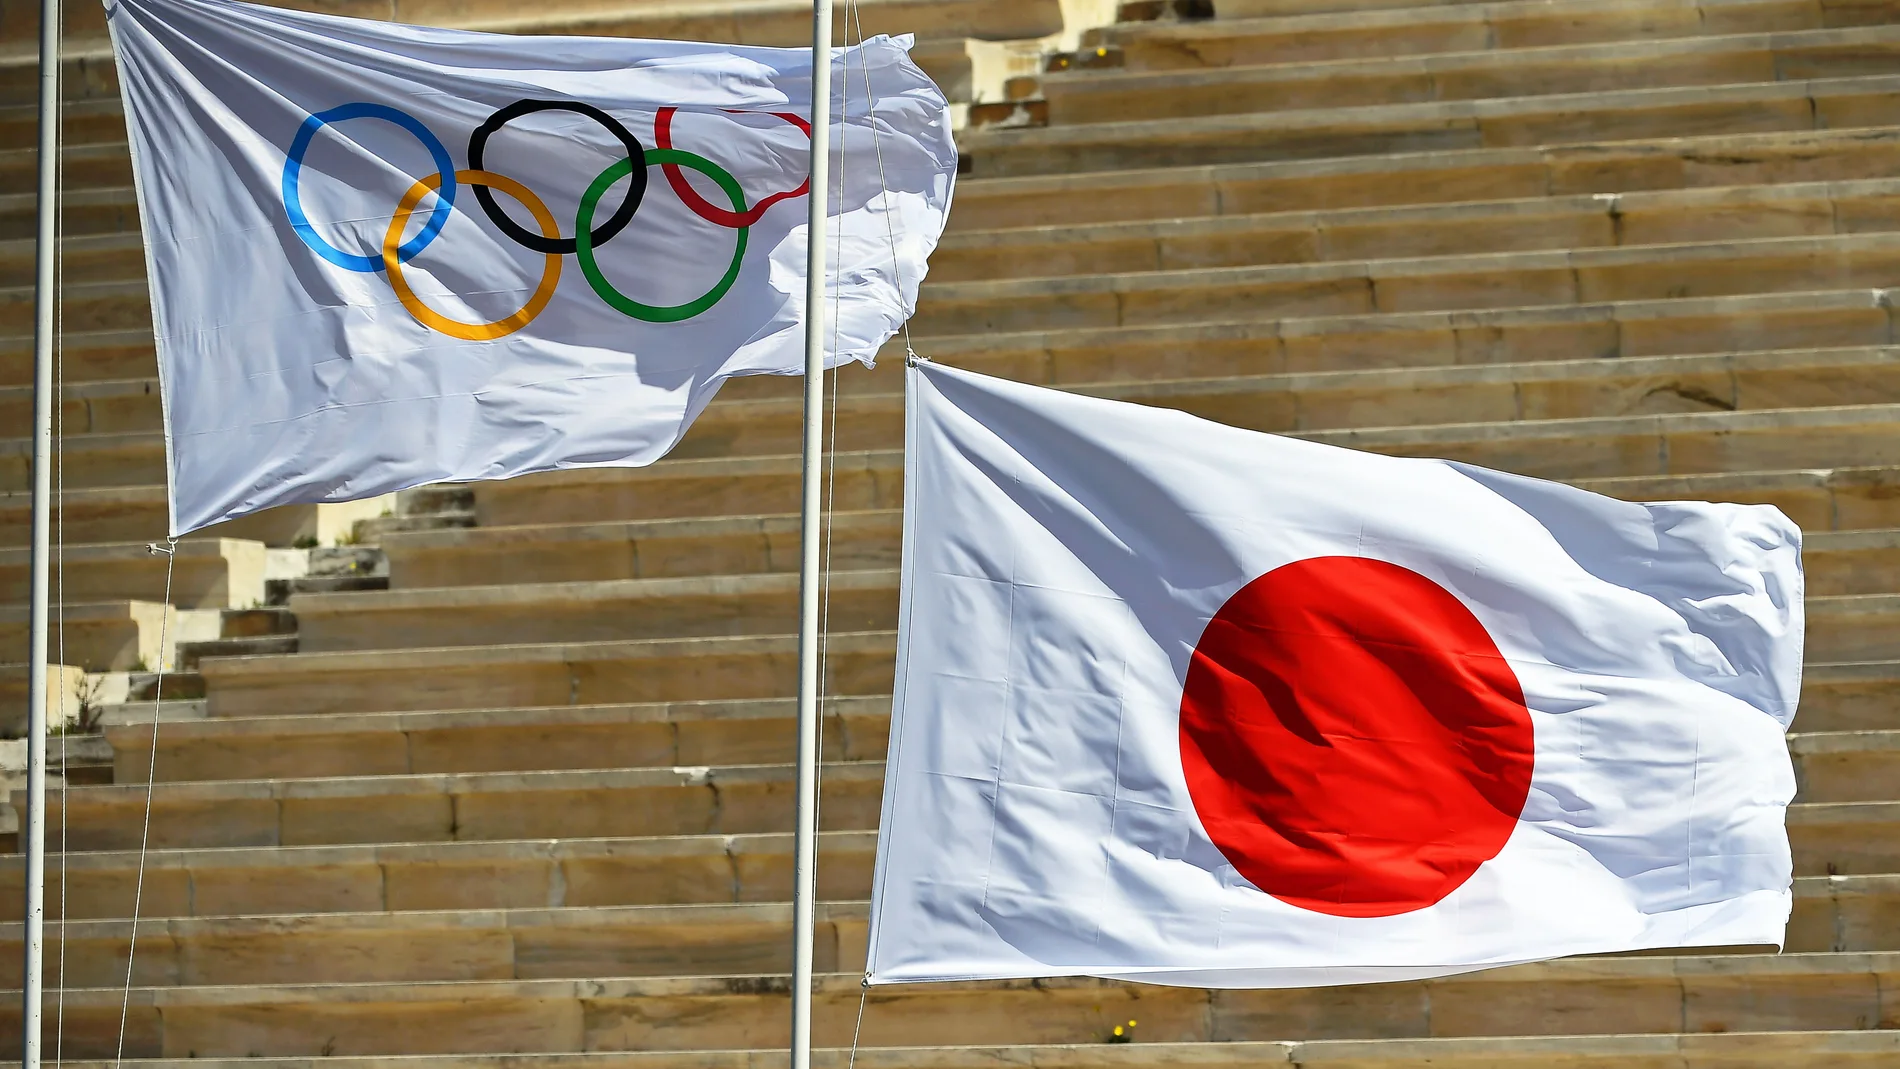 Tokyo 2020 Olympic Games postponed